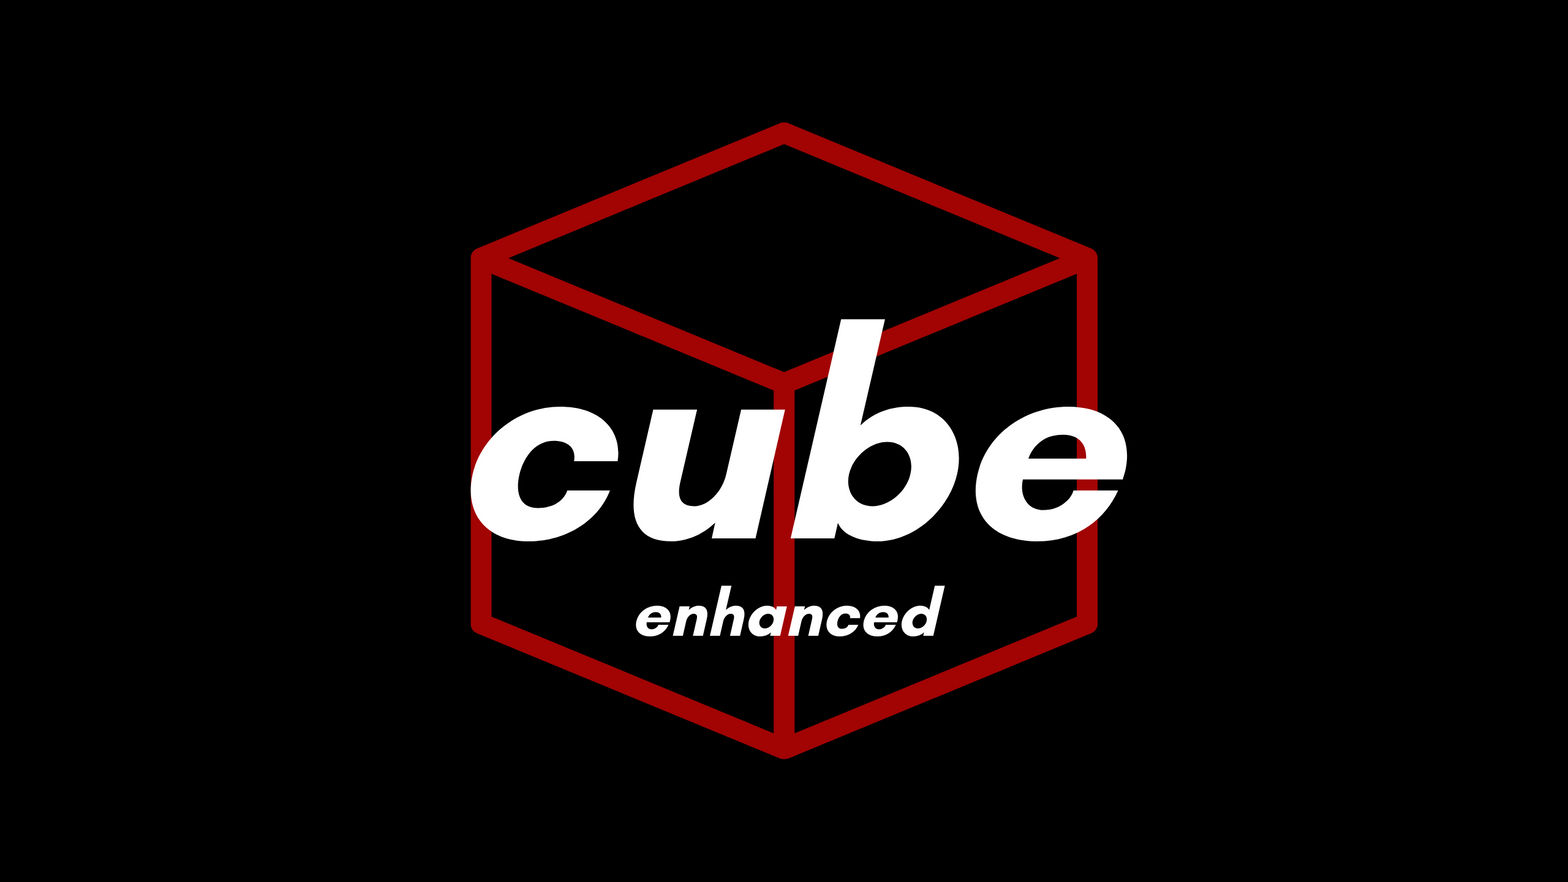 cube: enhanced